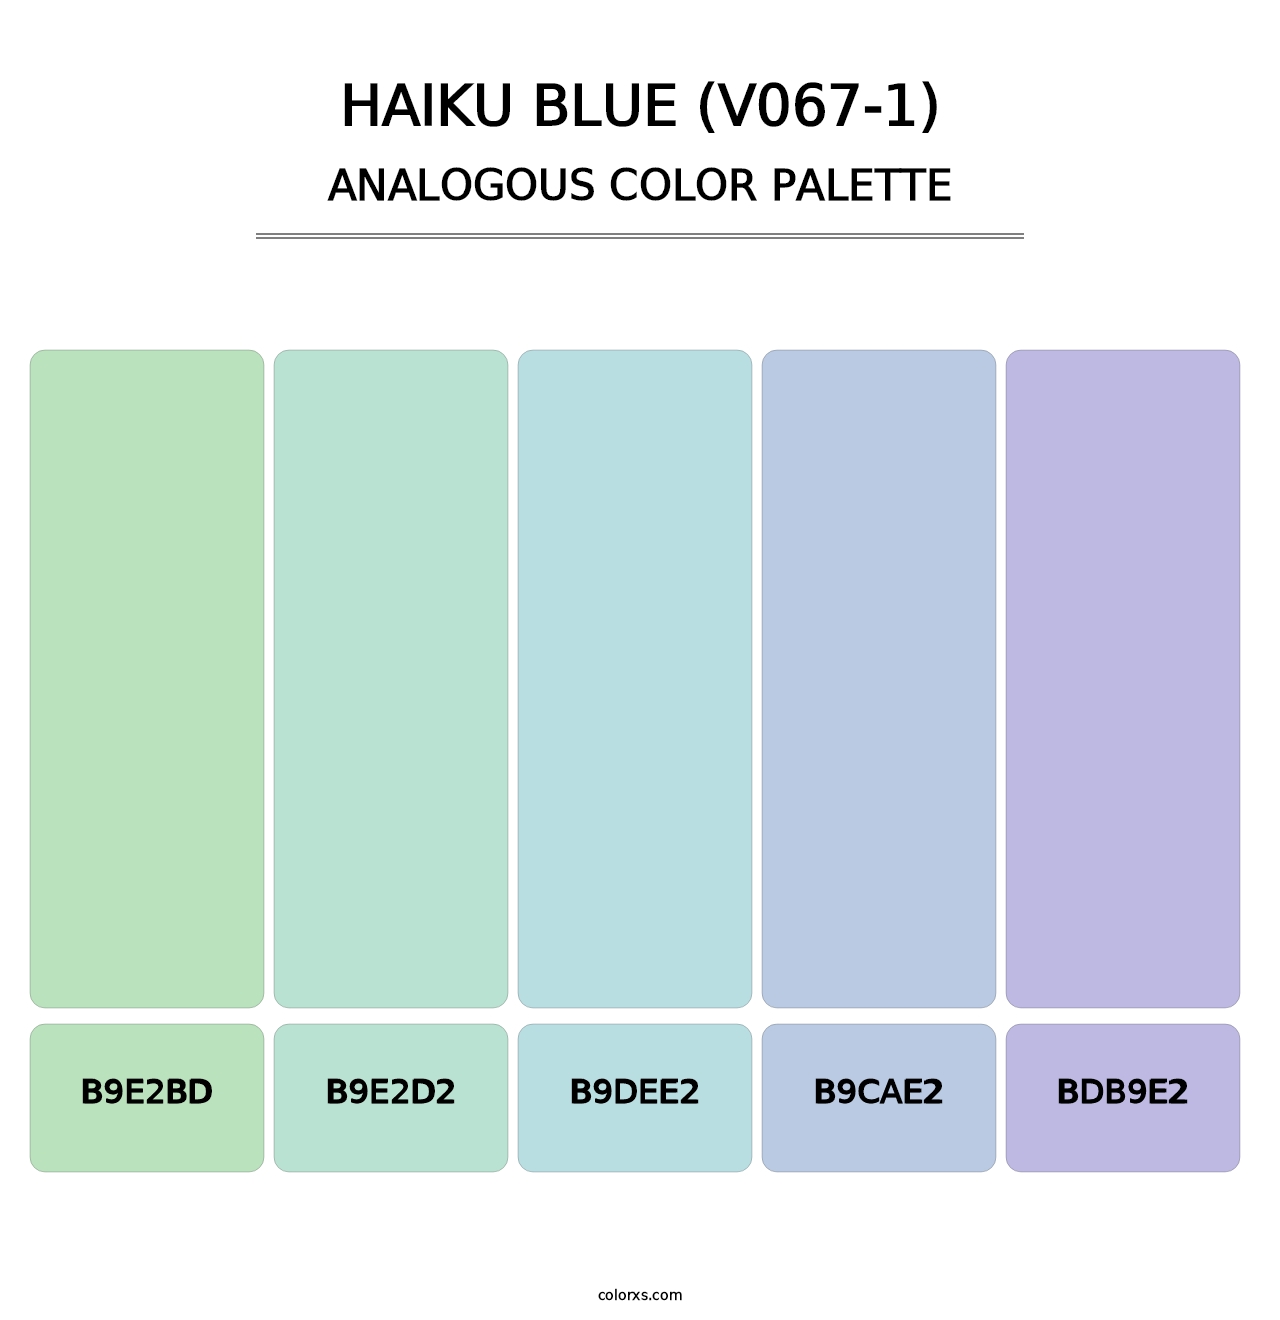 Haiku Blue (V067-1) - Analogous Color Palette